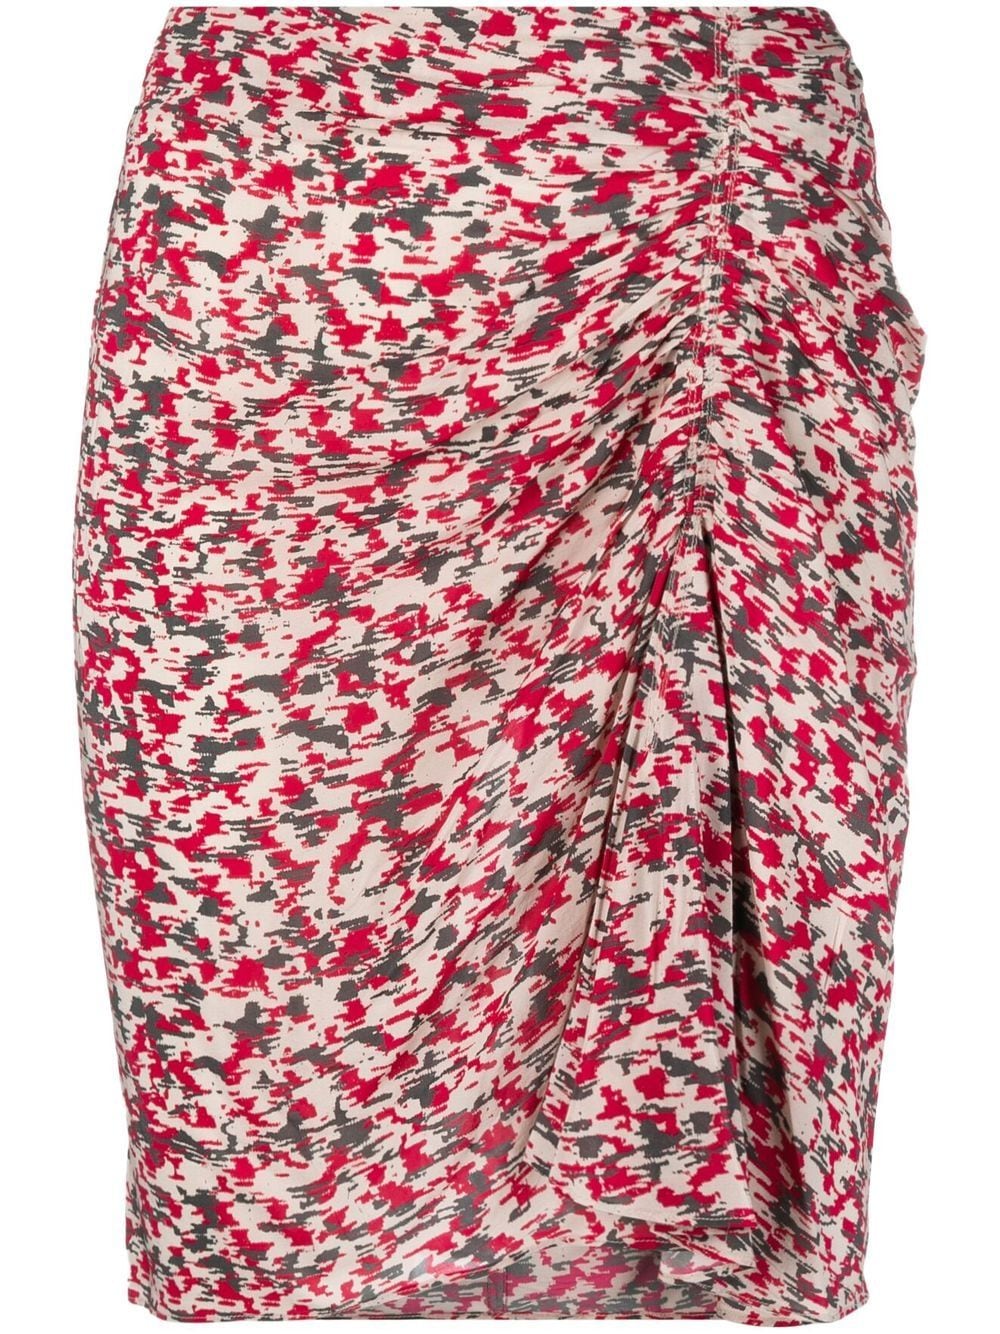 MARANT ÉTOILE floral-print Asymmetric Gathered Mini Skirt - Farfetch